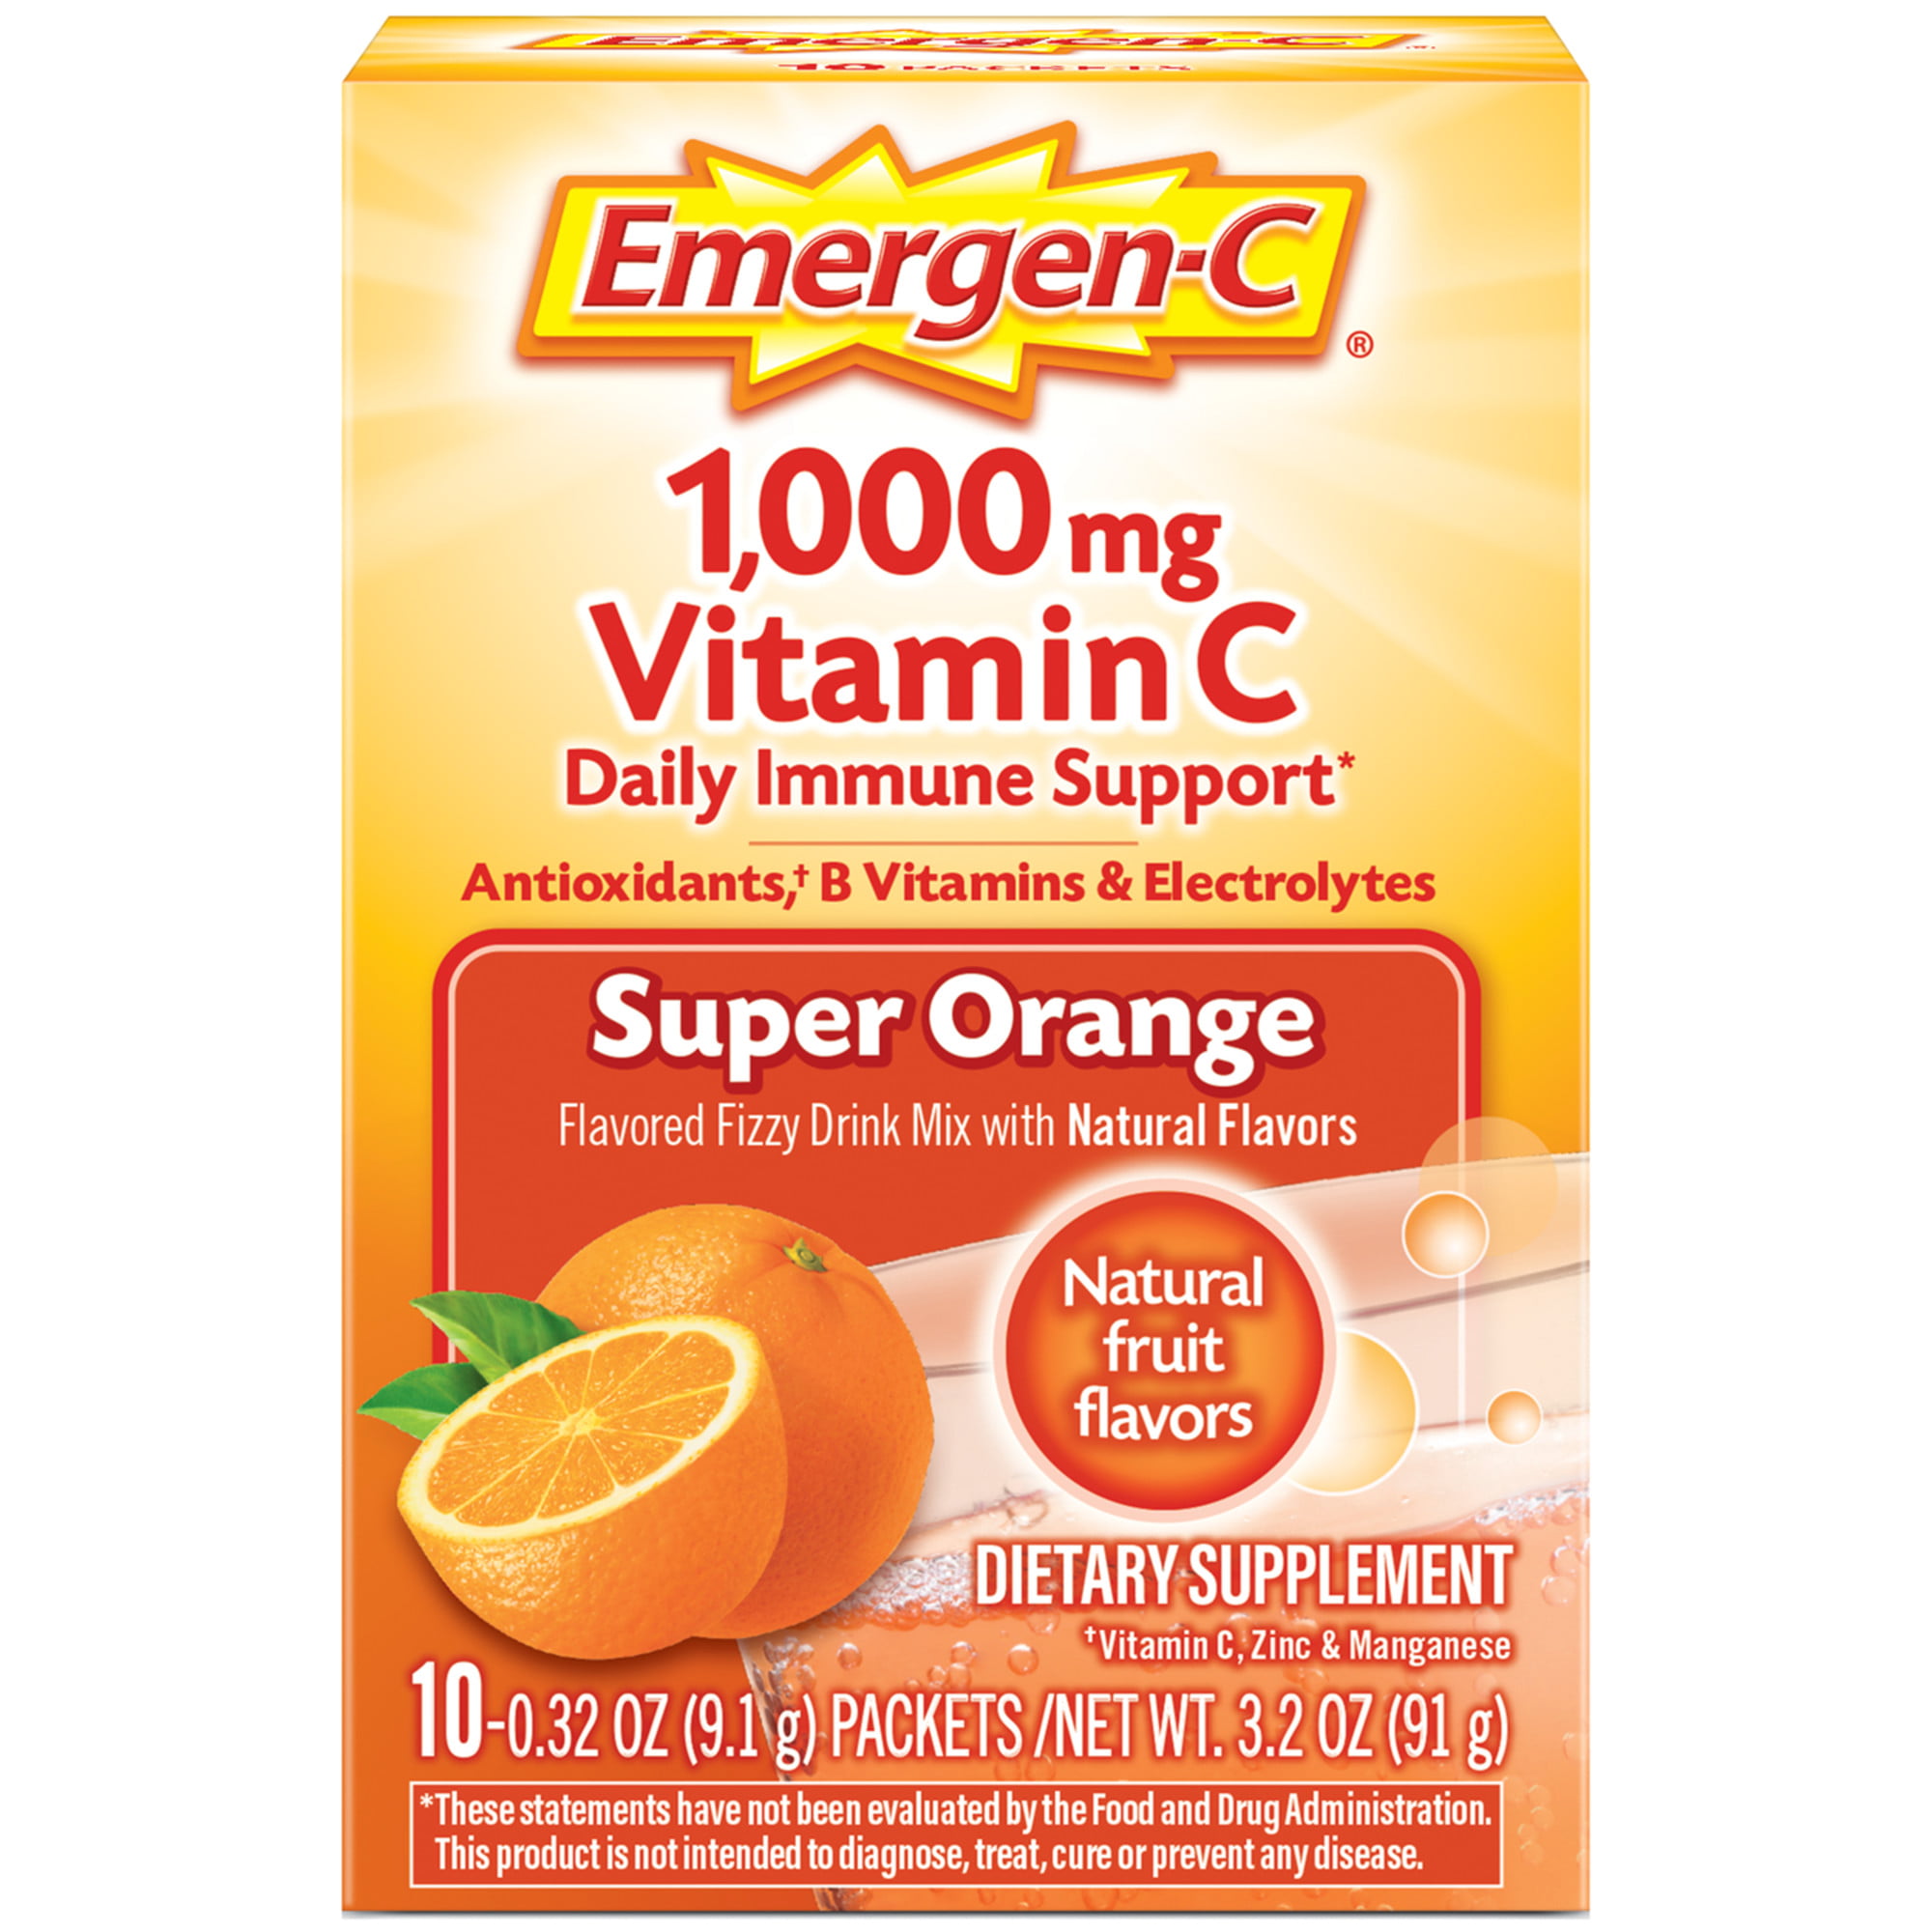 Emergen-C Vitamin C Supplement for Immune Support, Super Orange, Walmart.com